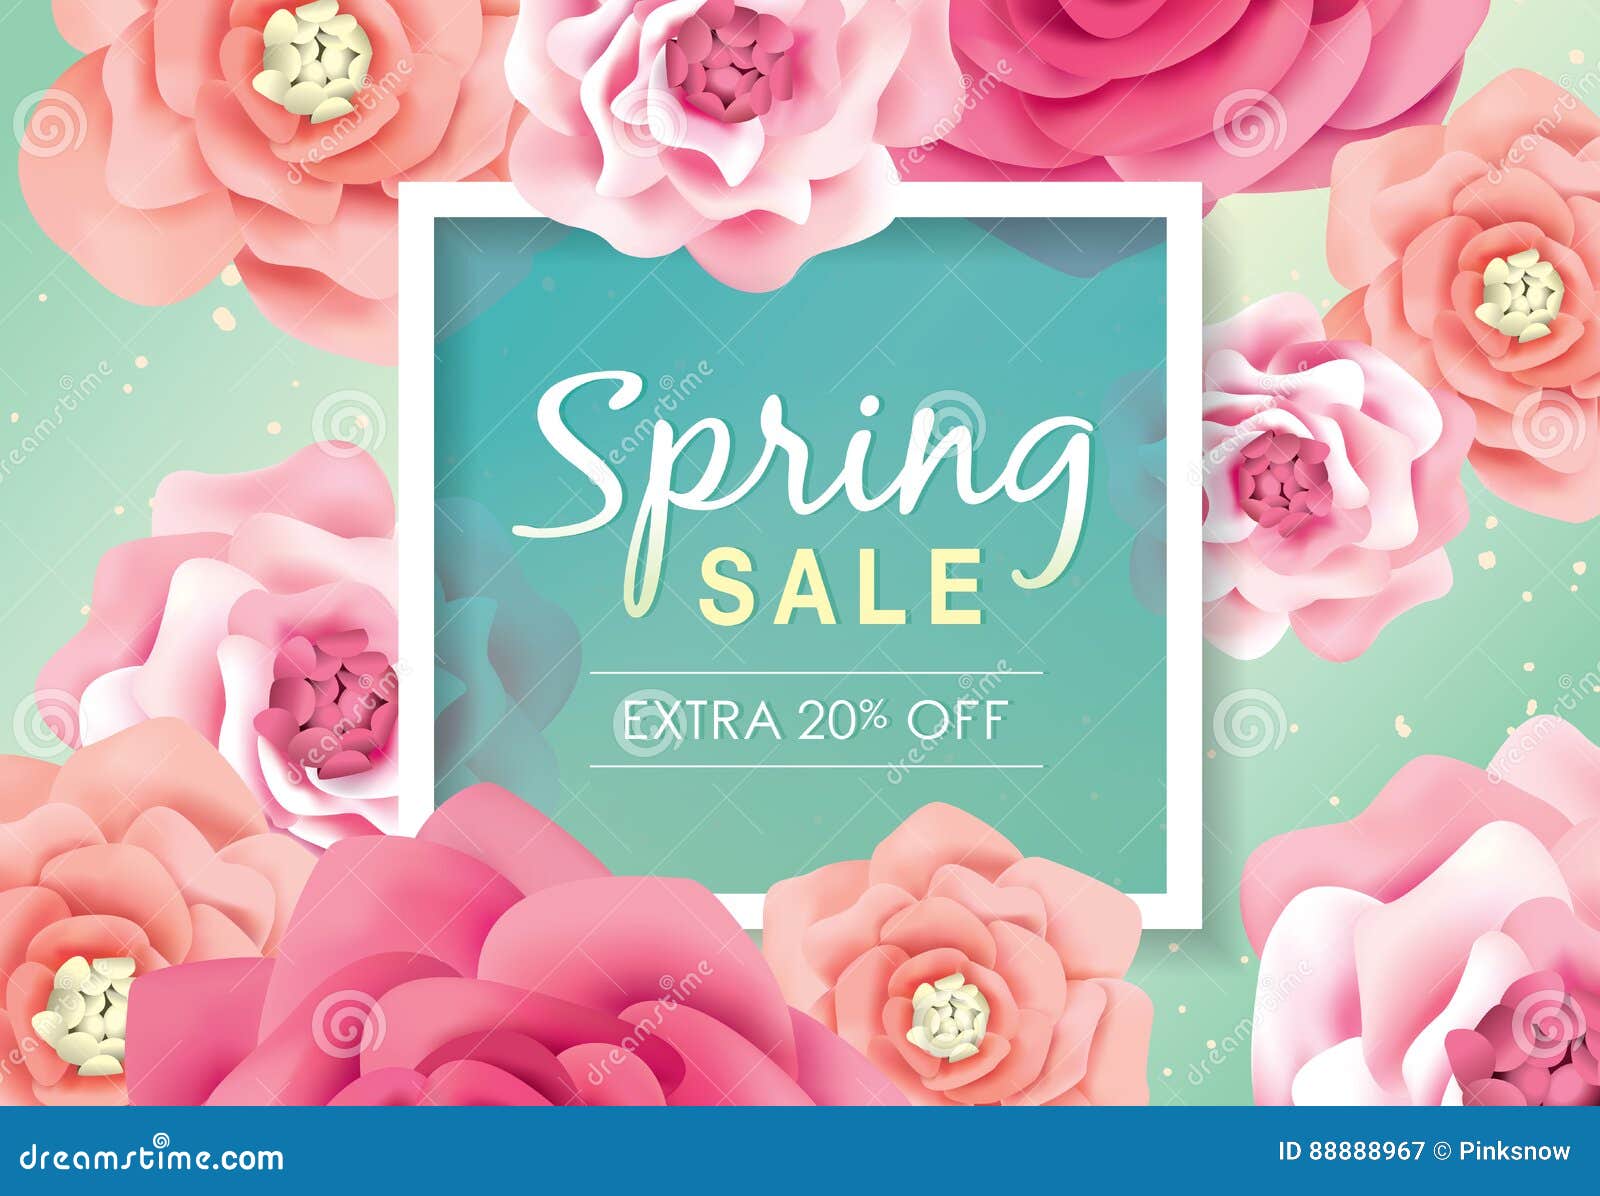 spring sale poster